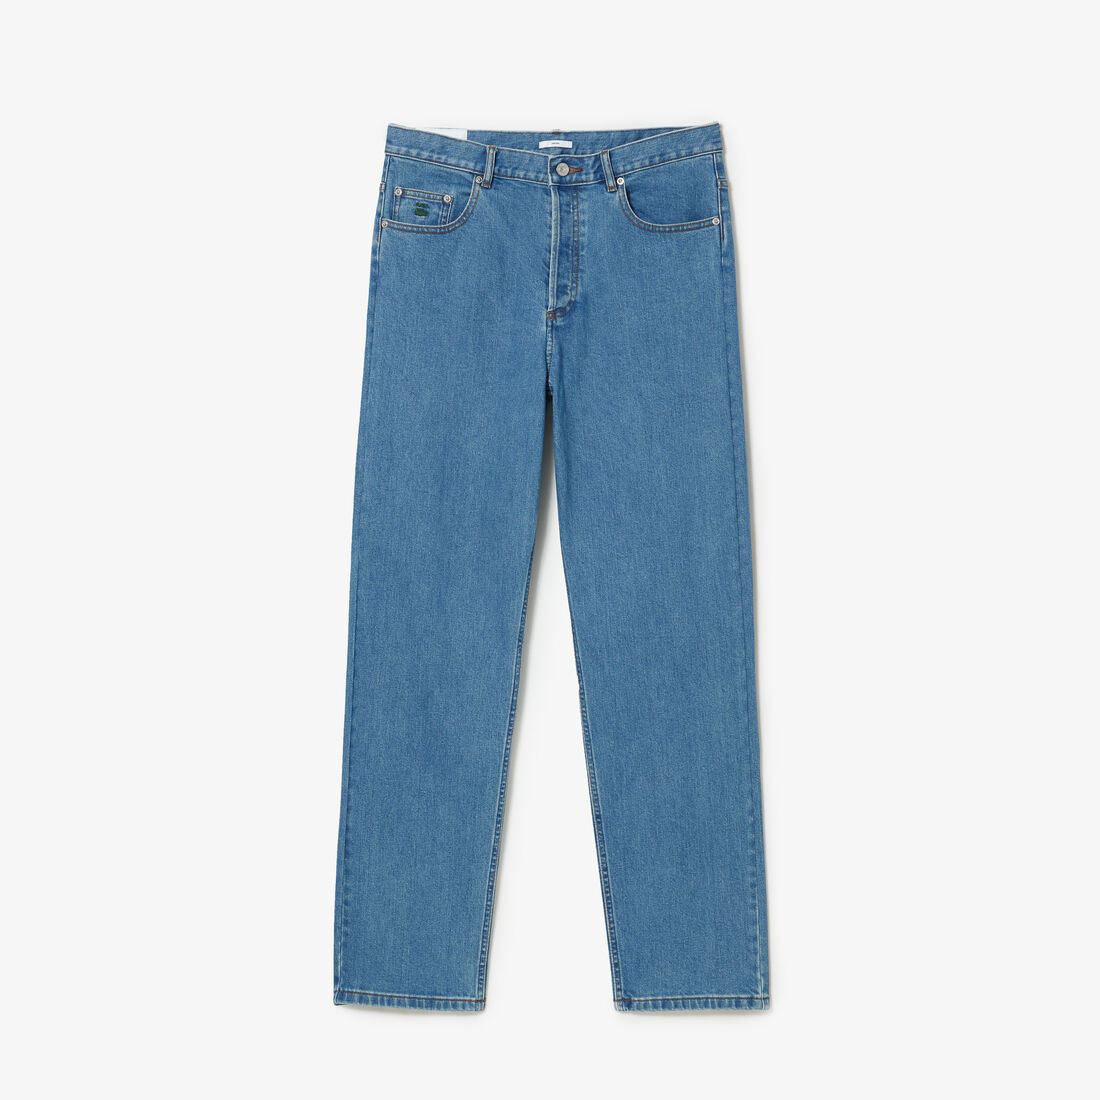 Lacoste X A.p.c. Low-cut Jeans Herren Blau | QMFI-65934